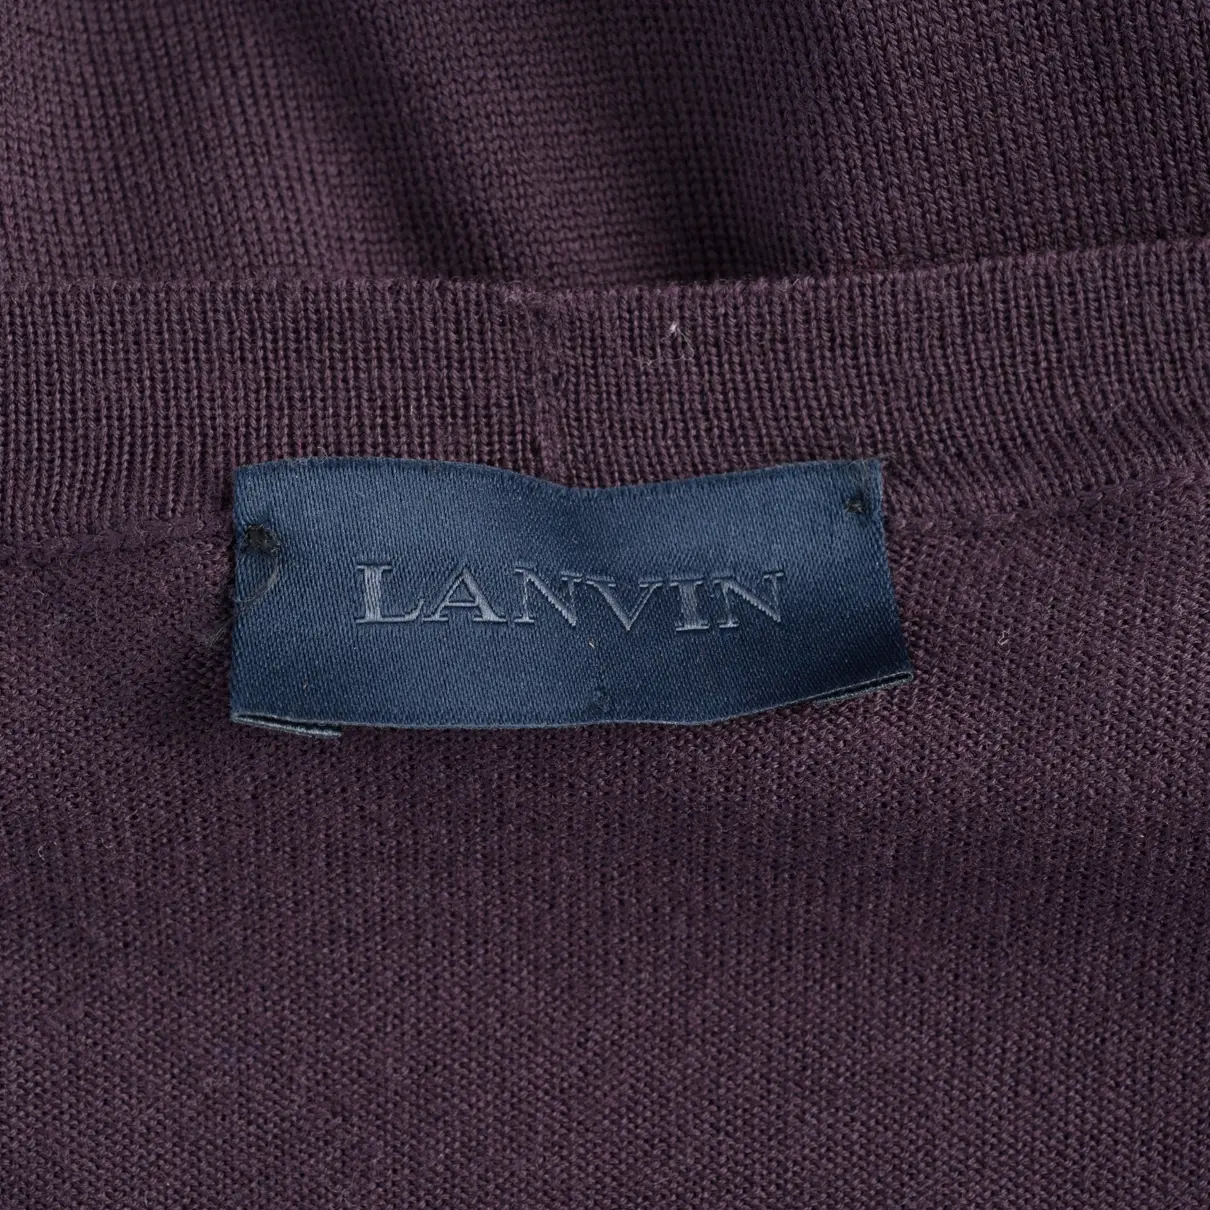 Buy Lanvin Wool vest online